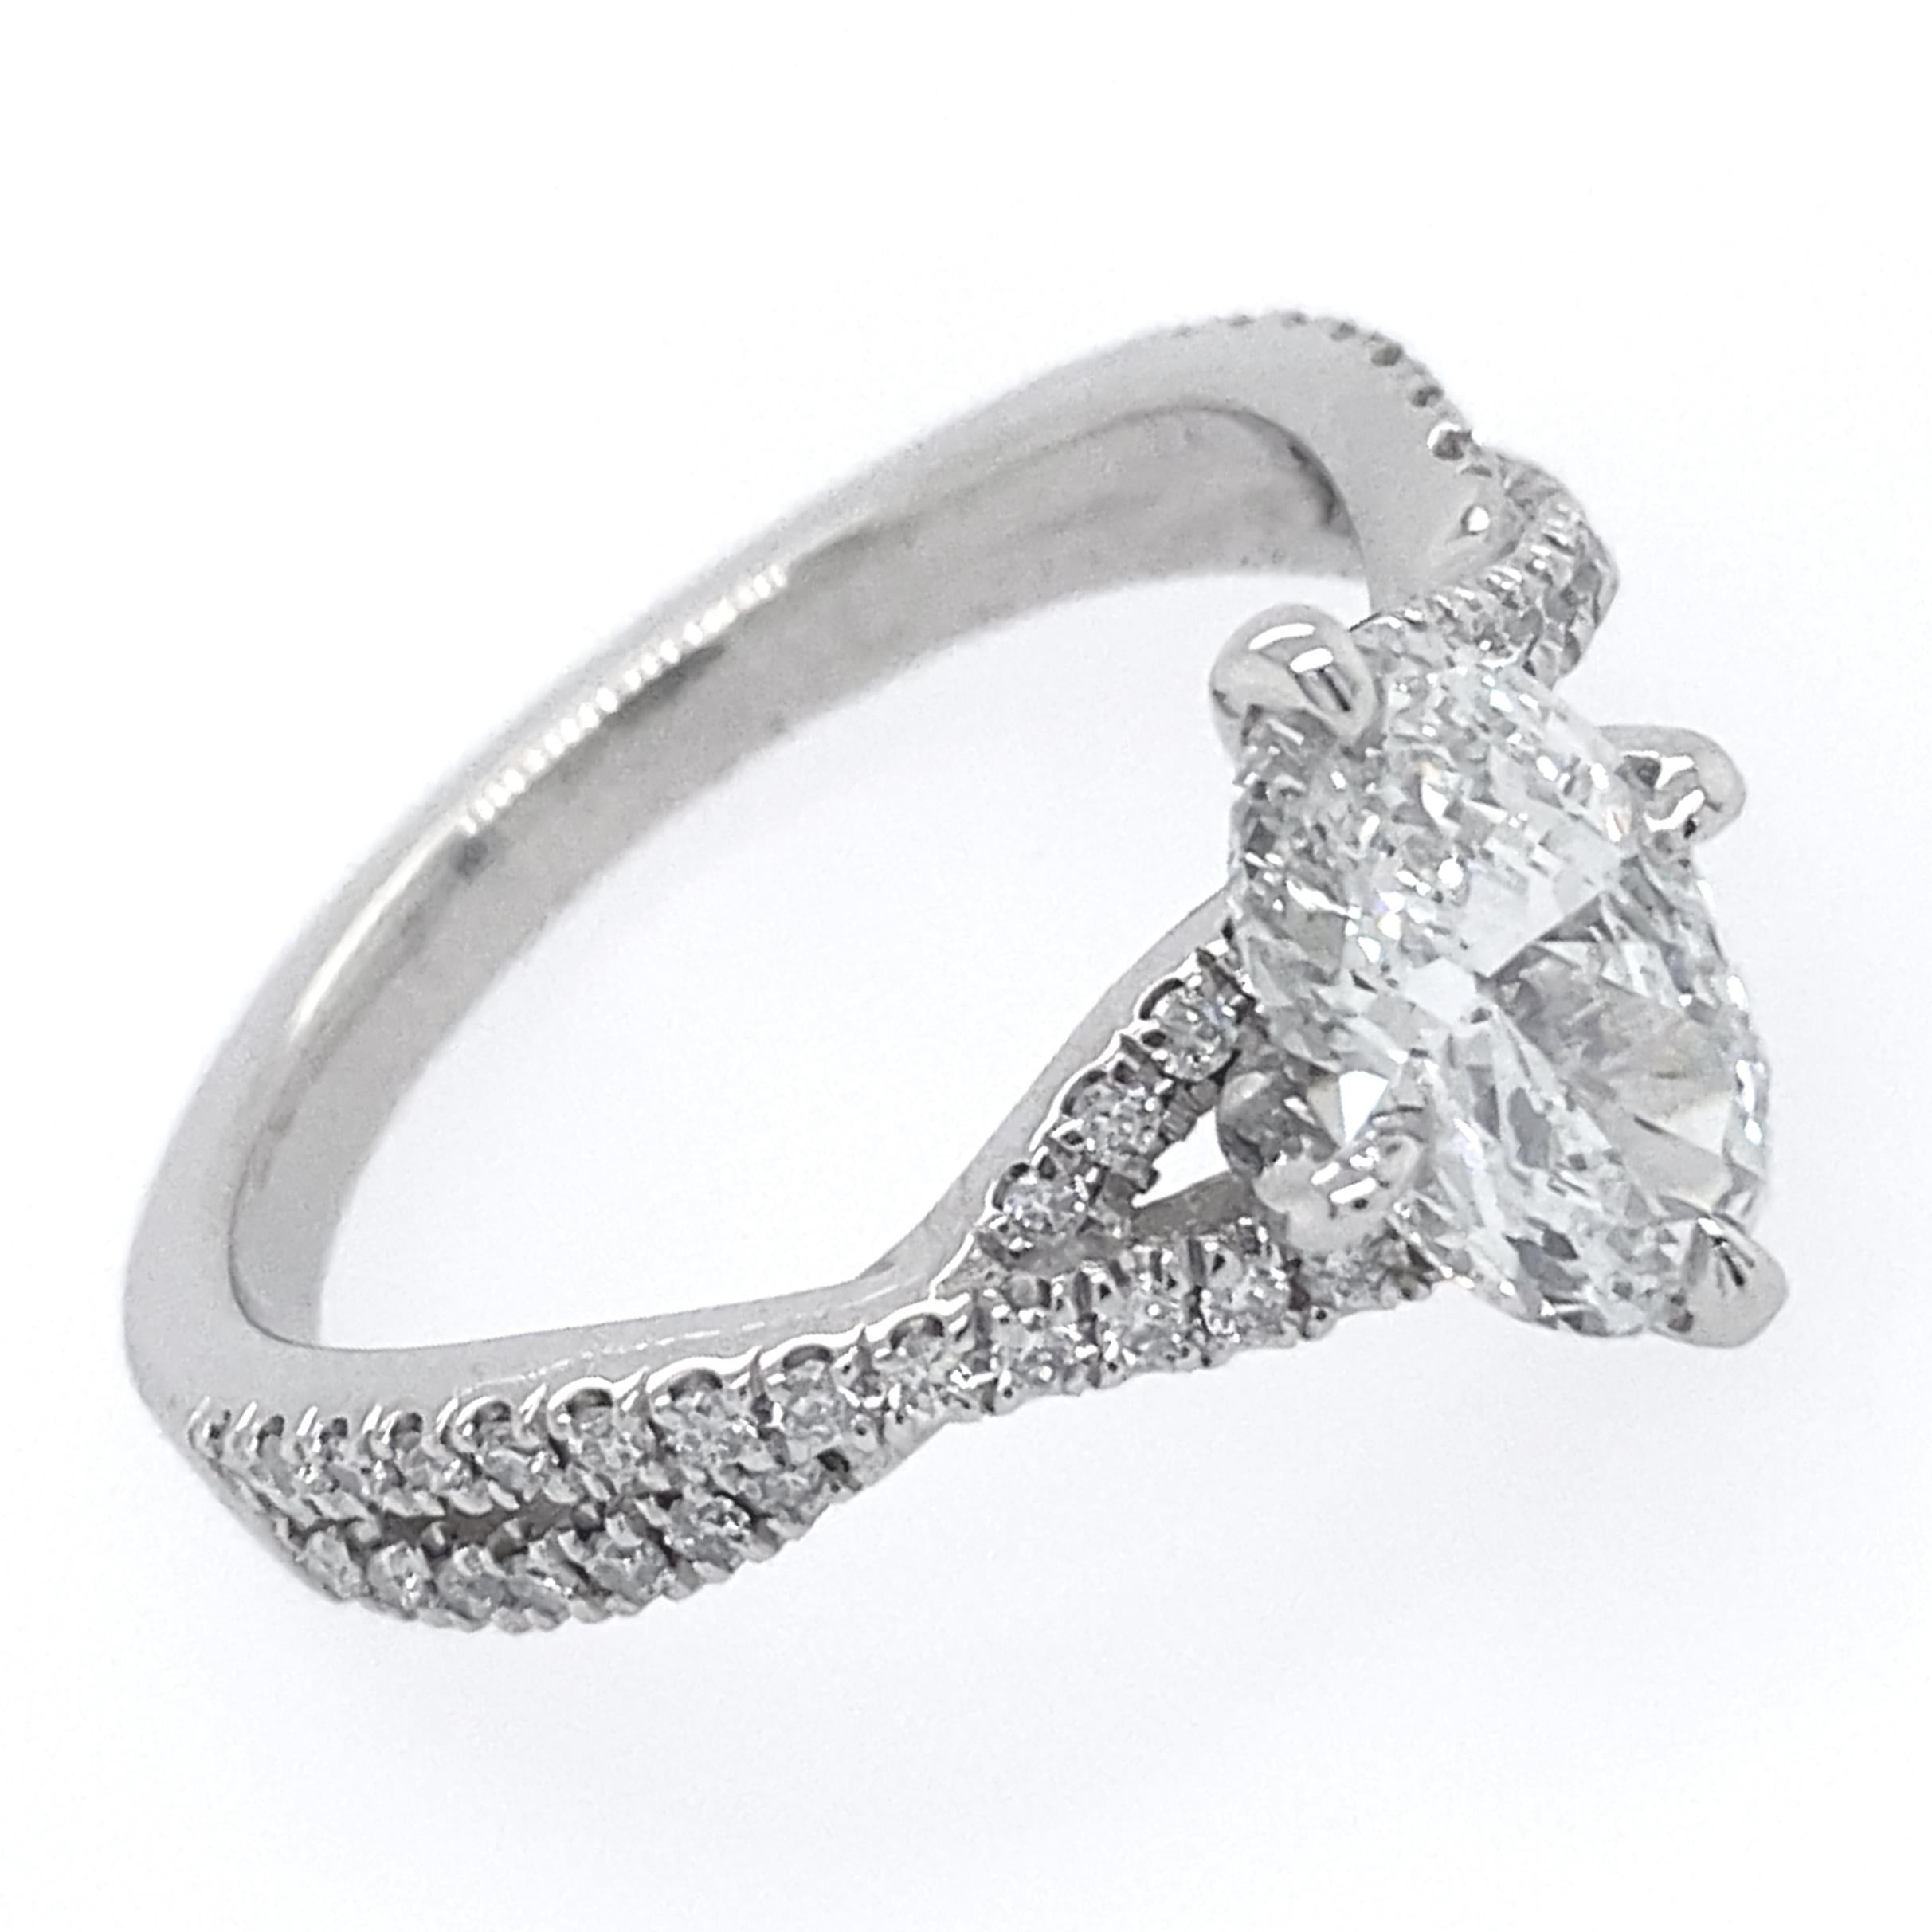 Contemporary 1.09 Carat GAI-Certified Oval Diamond Ring in Criss-Cross Platinum Setting